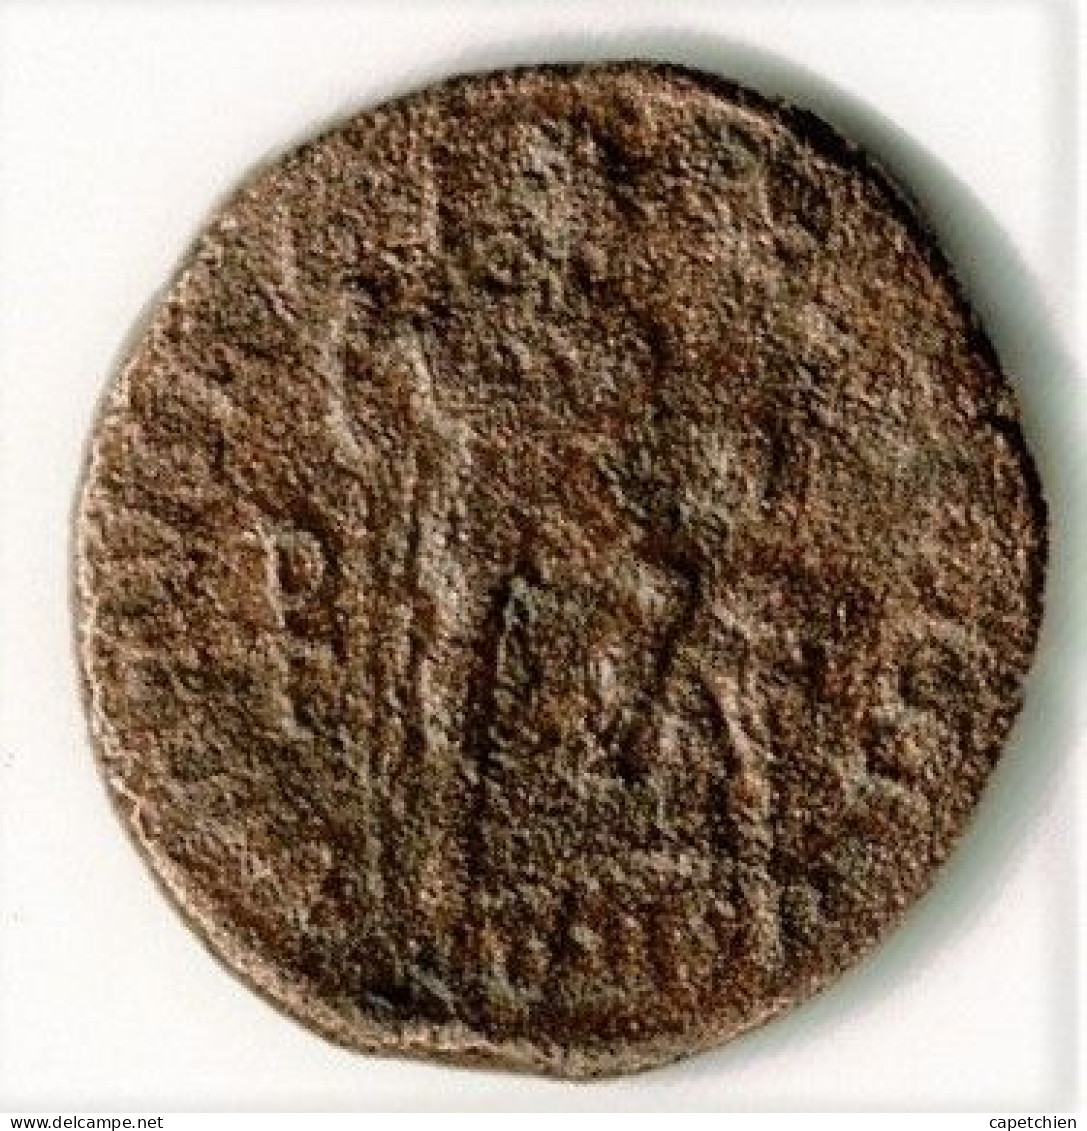 JOLI PETIT BRONZE ROMAIN  / ARCADIUS / 4.86 G  / 21 Mm / - La Fin De L'Empire (363-476)